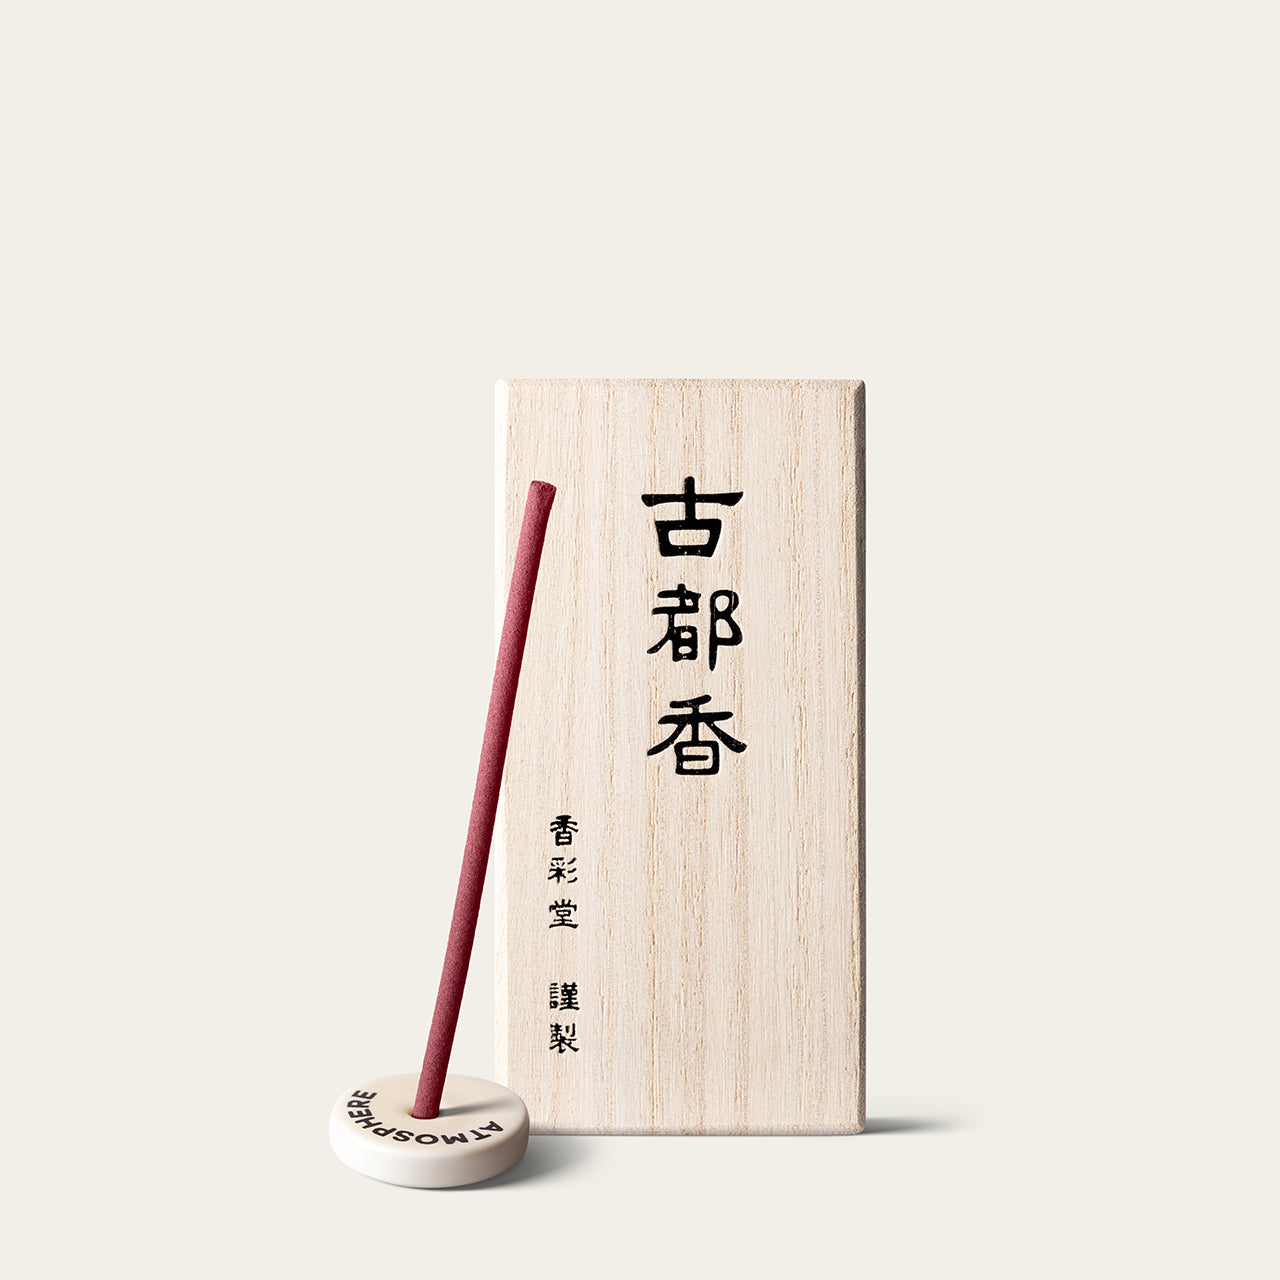 Kousaido Ancient City Ancient City Kotoka Japanese incense sticks (30 sticks) with Atmosphere ceramic incense holder